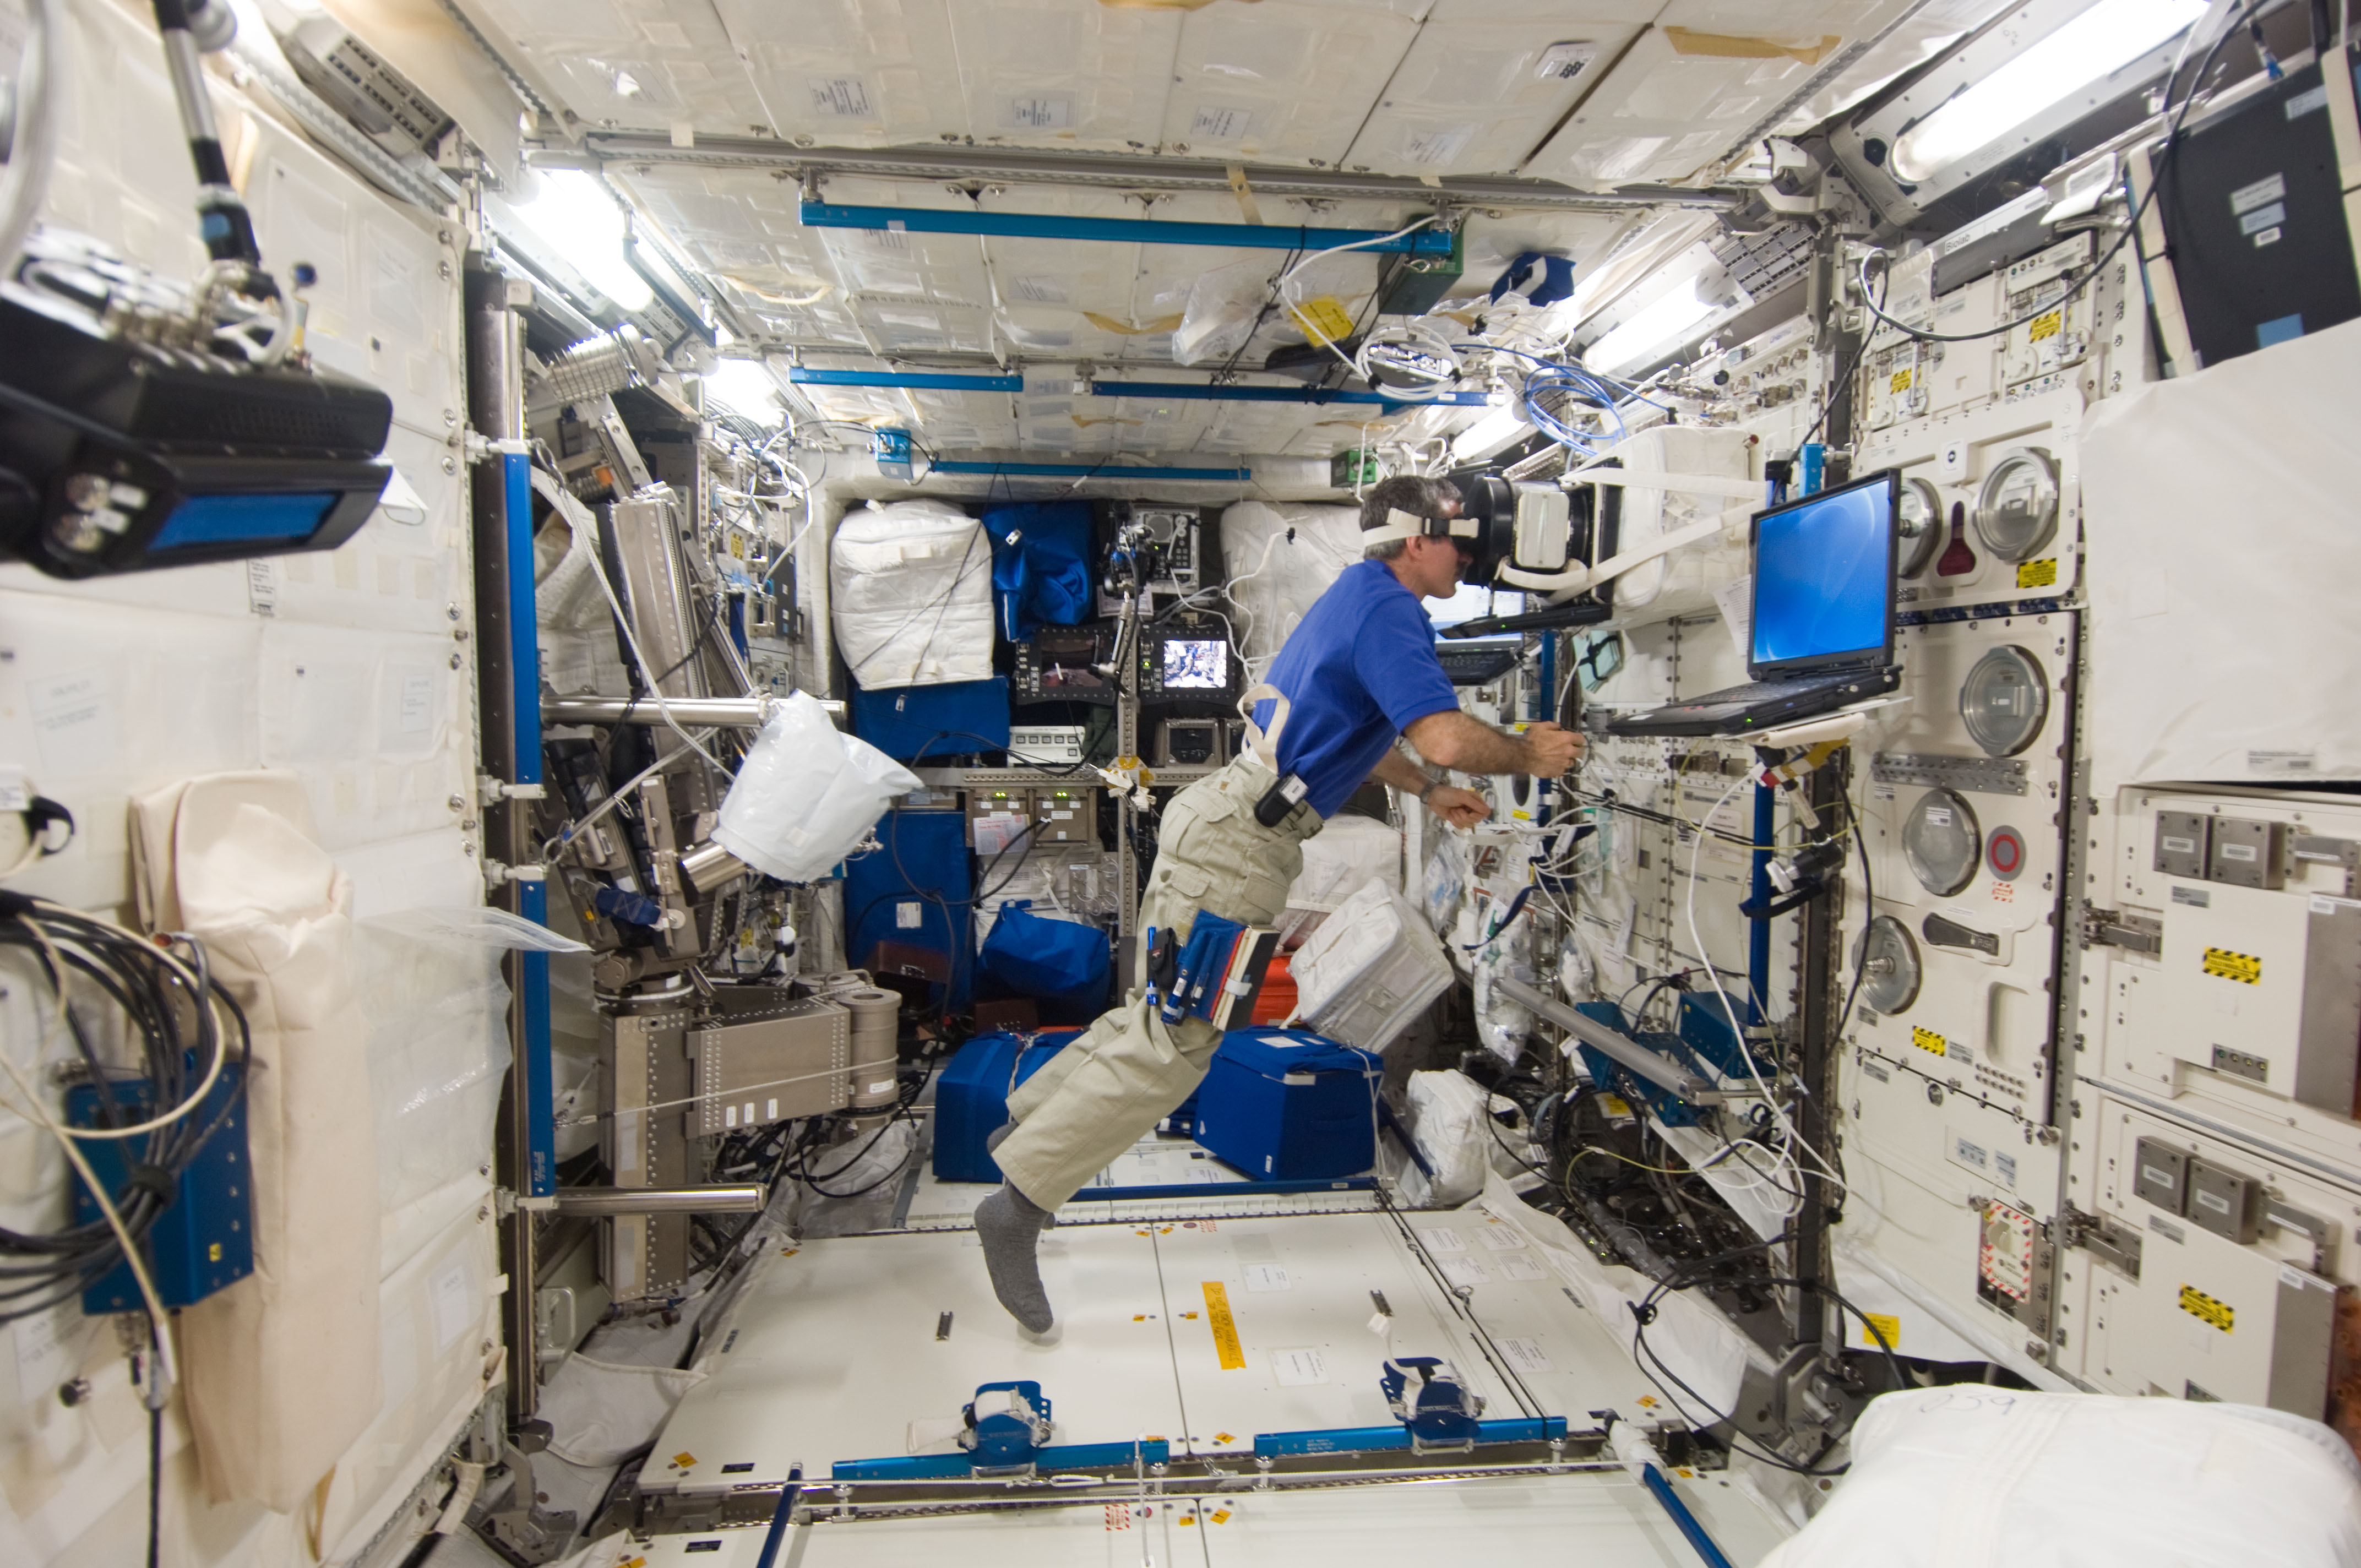 ISS-30 Dan Burbank uses Neurospat in the Columbus lab